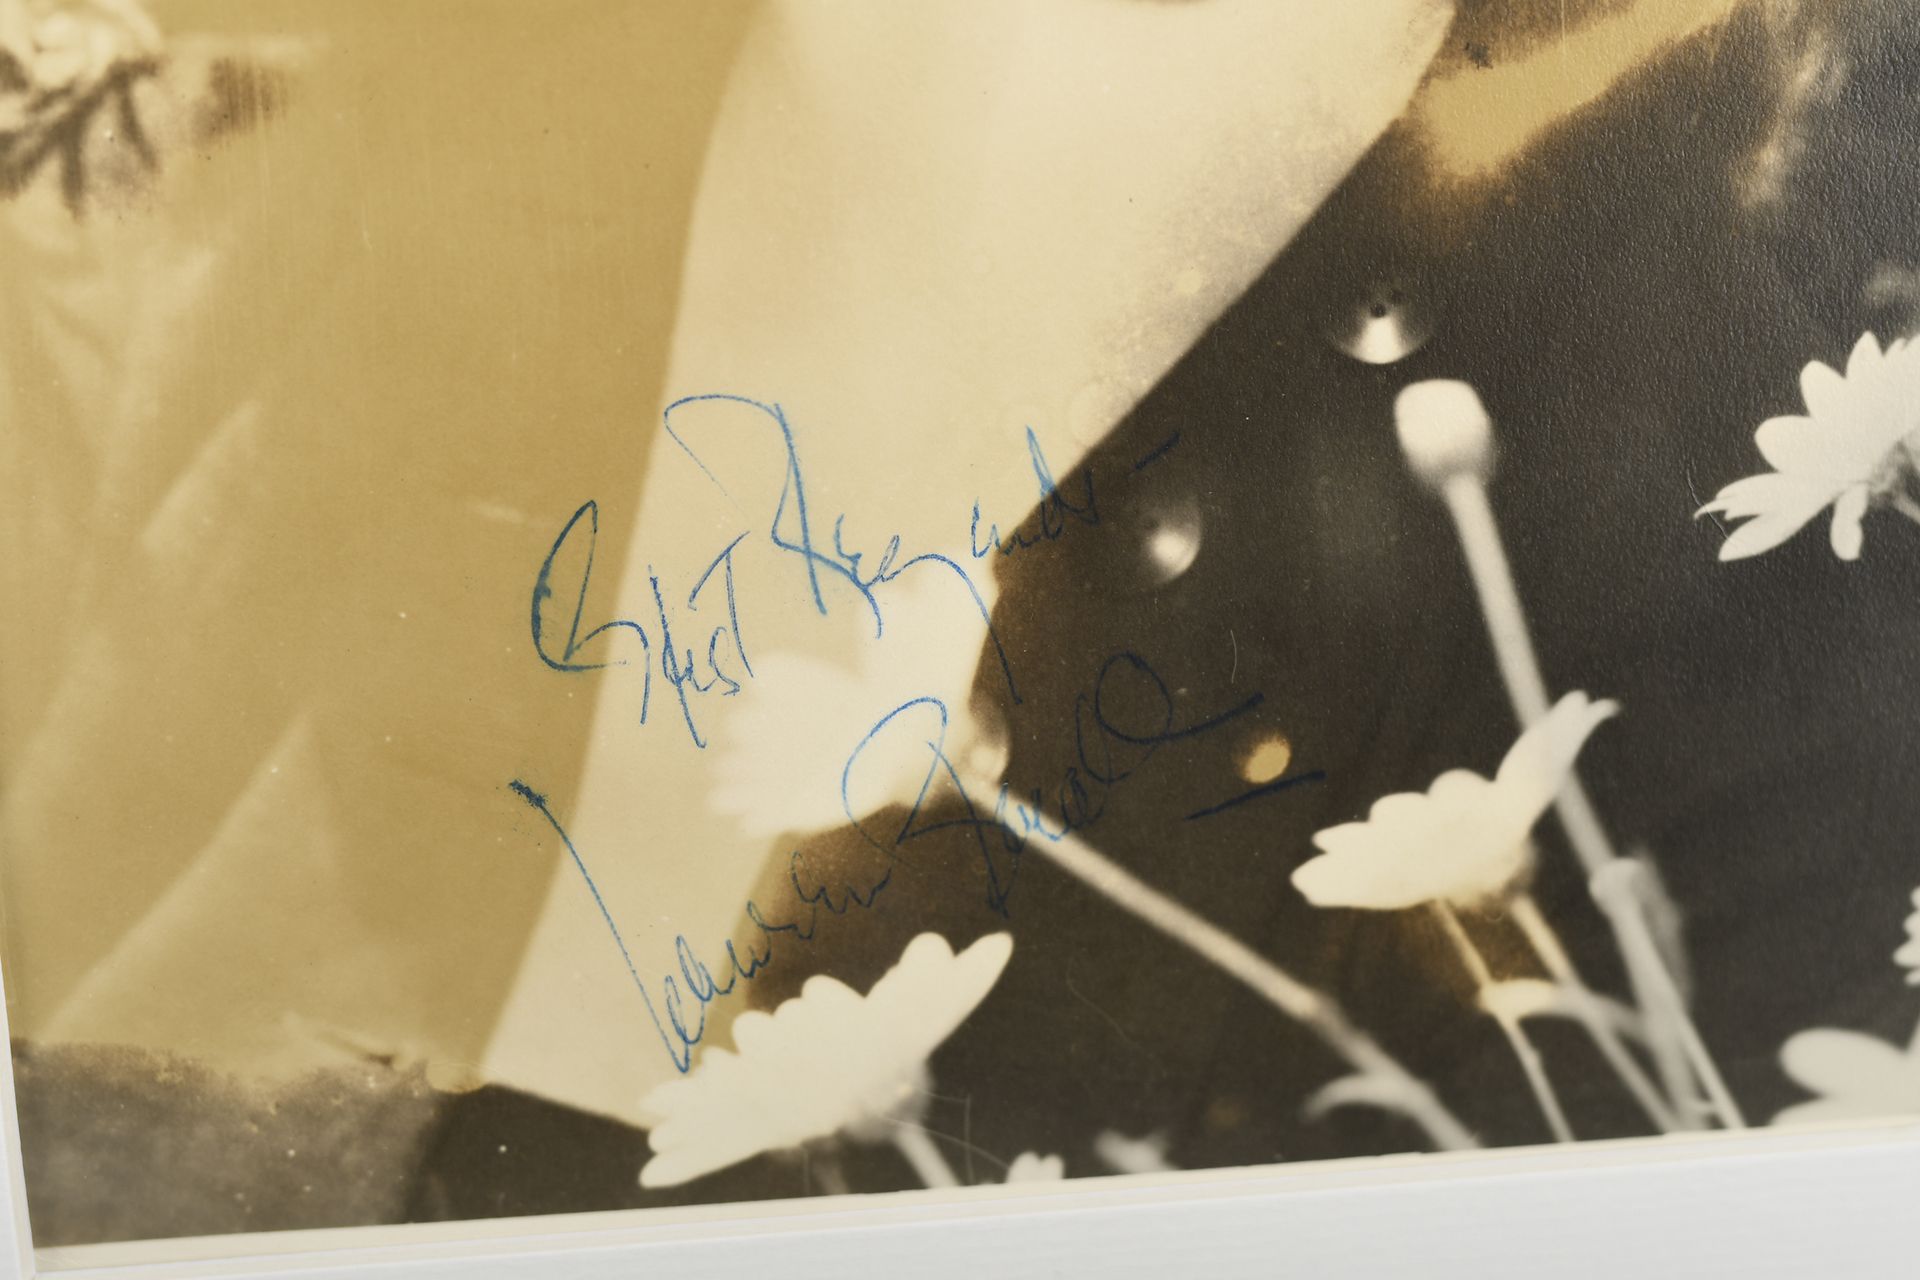 Lauren Bacall Unique Signed Photo Presentation - Image 3 of 4